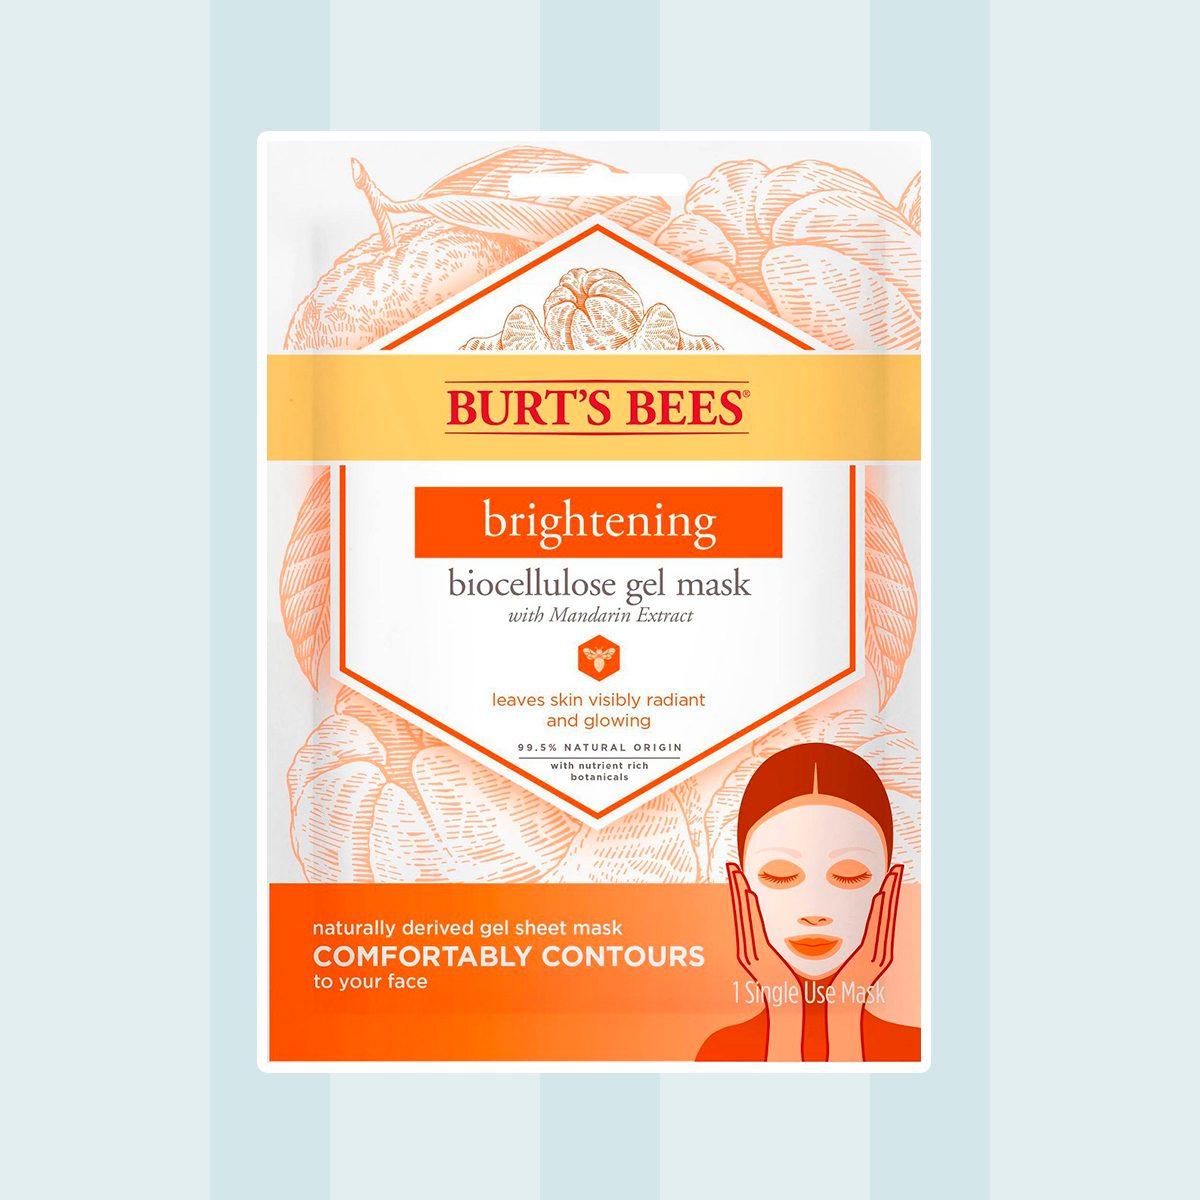 Burt's Bees Brightening Biocellulose Gel Mask